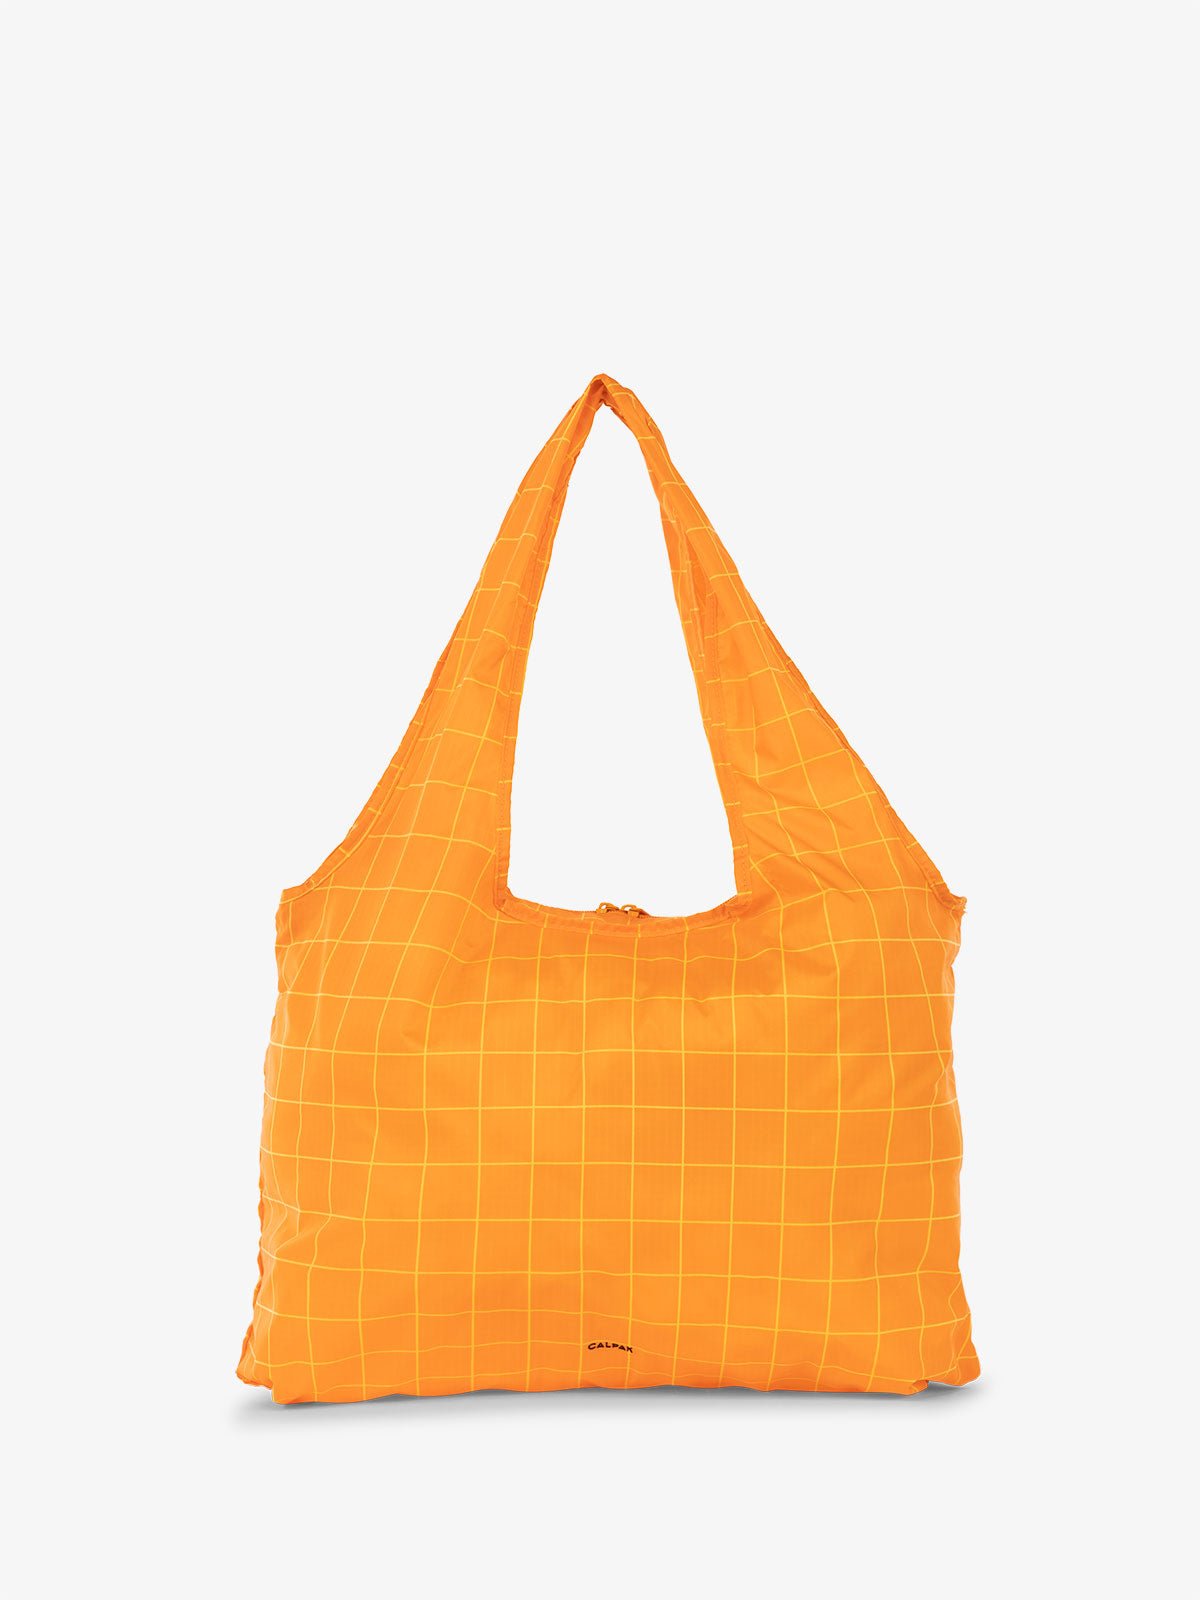 CALPAK Compakt tote bag in orange grid